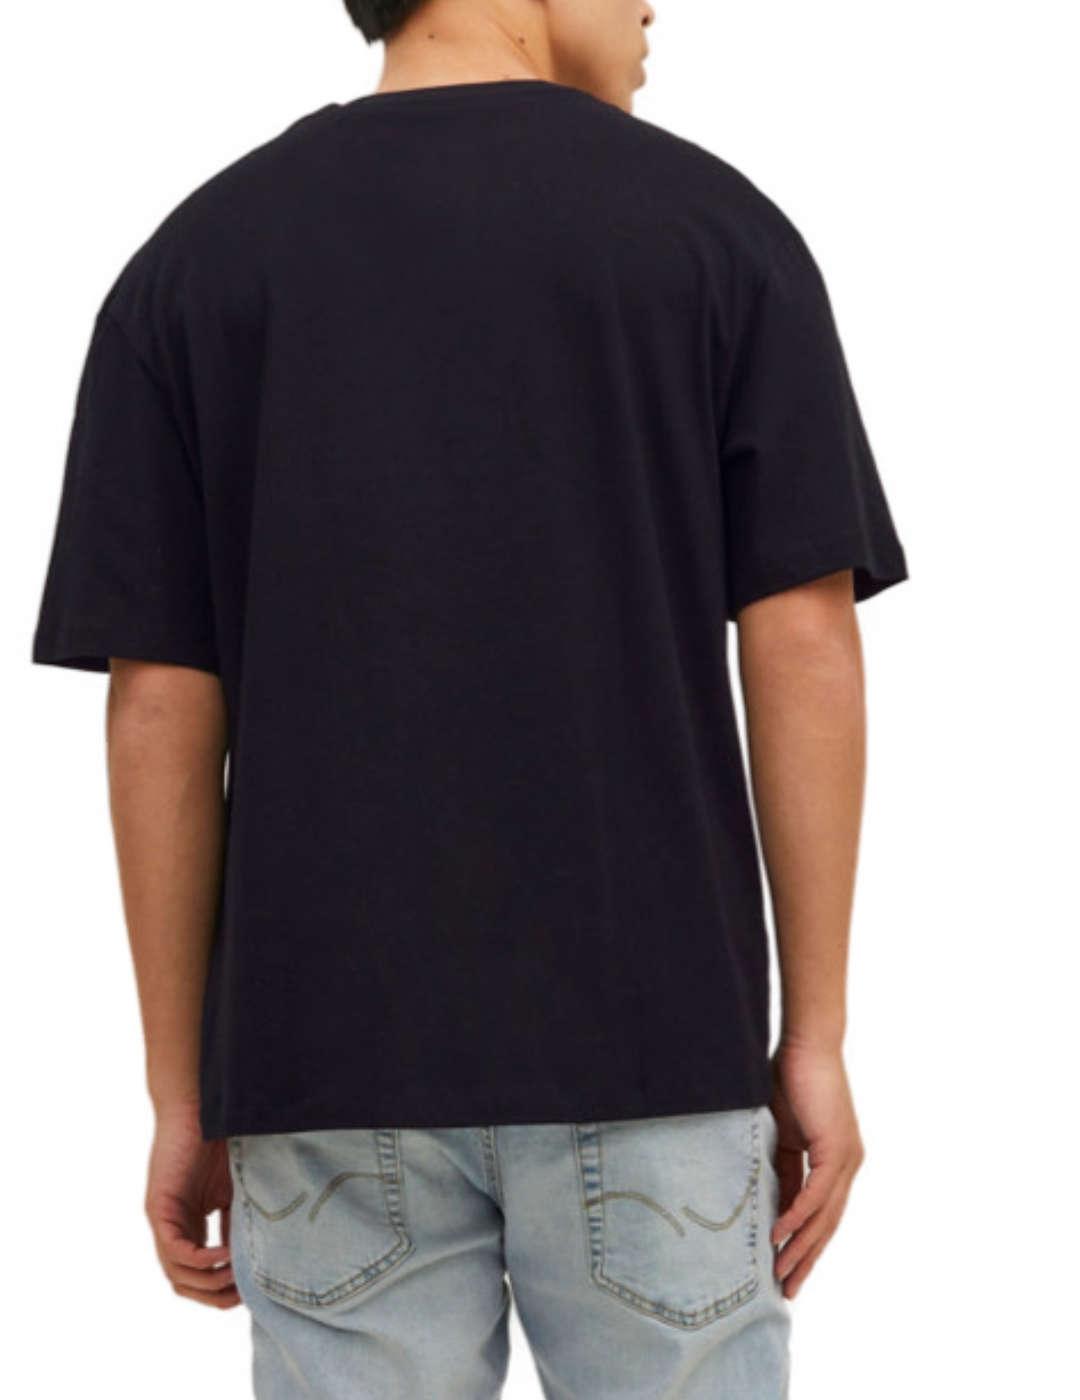 Camiseta Jack&Jones Harting negro de manga corta para hombre